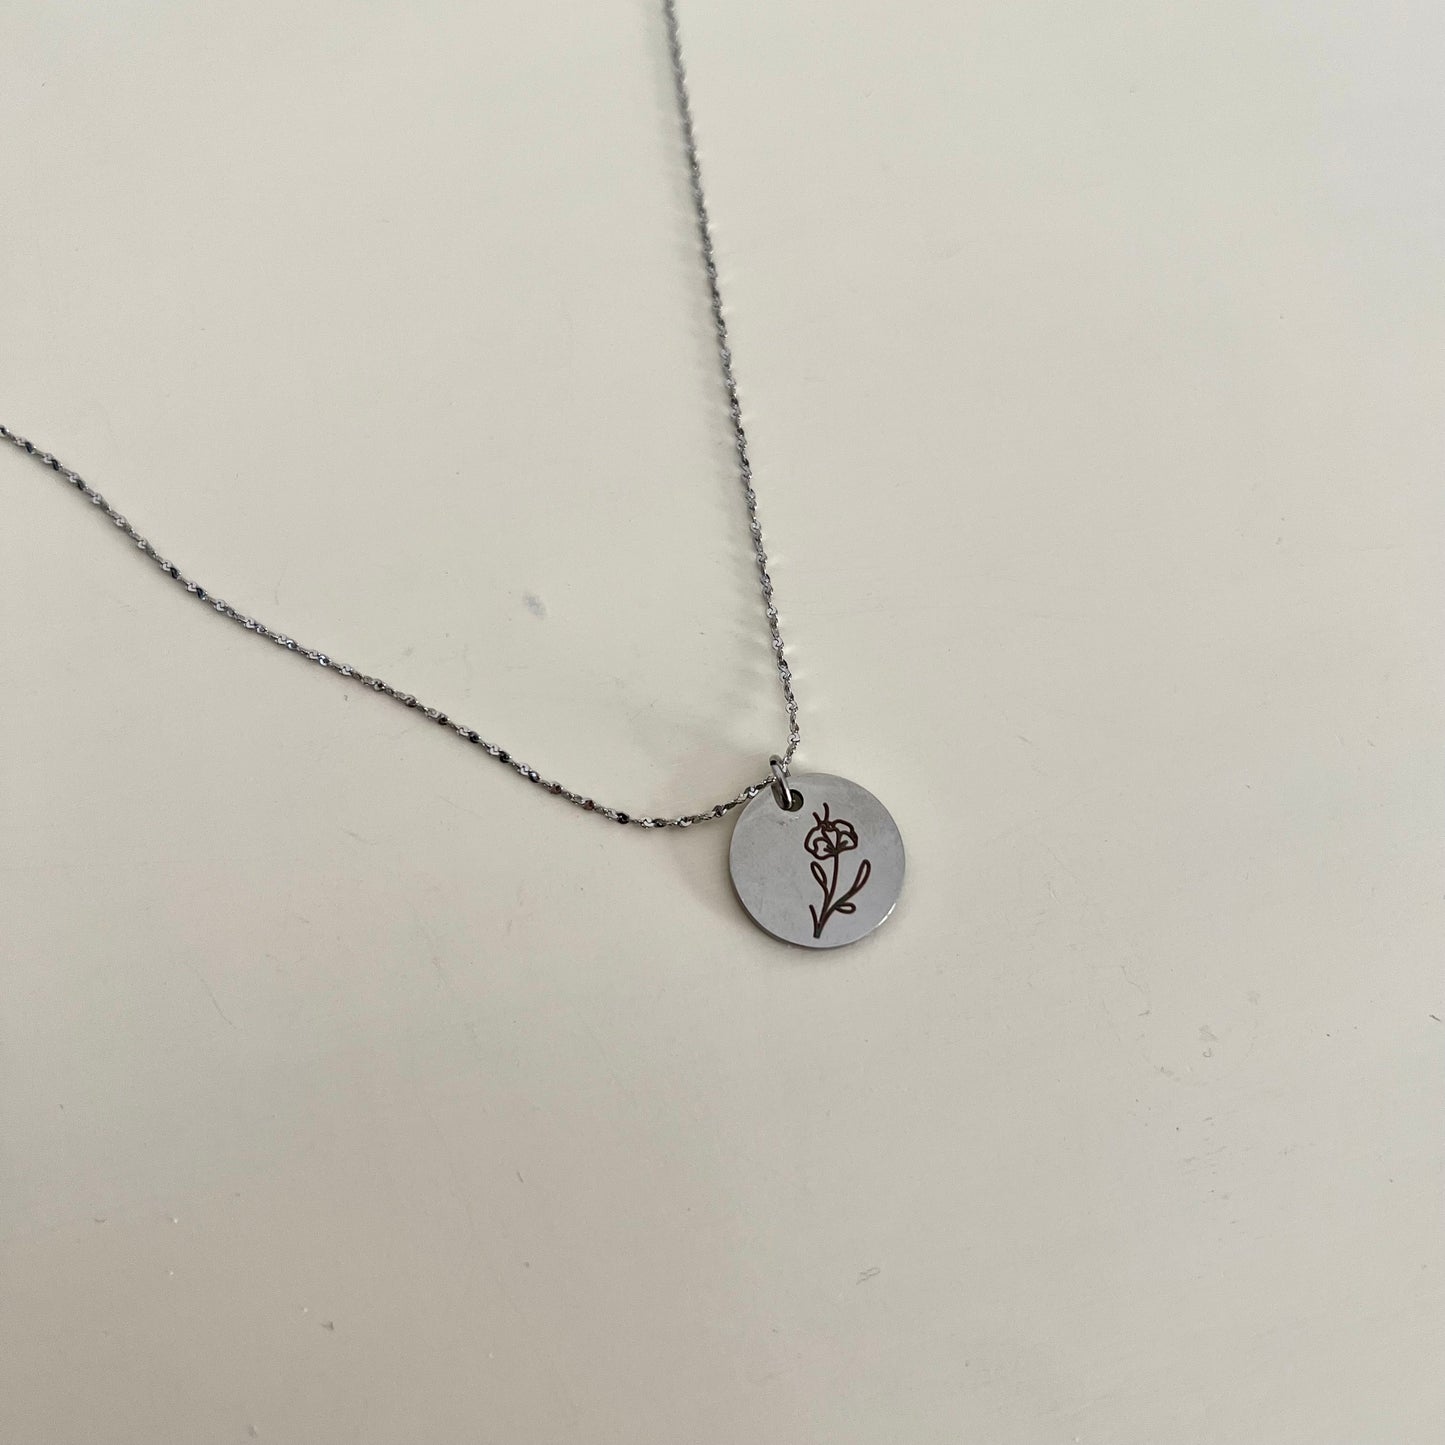 Birth flower necklace - Silver